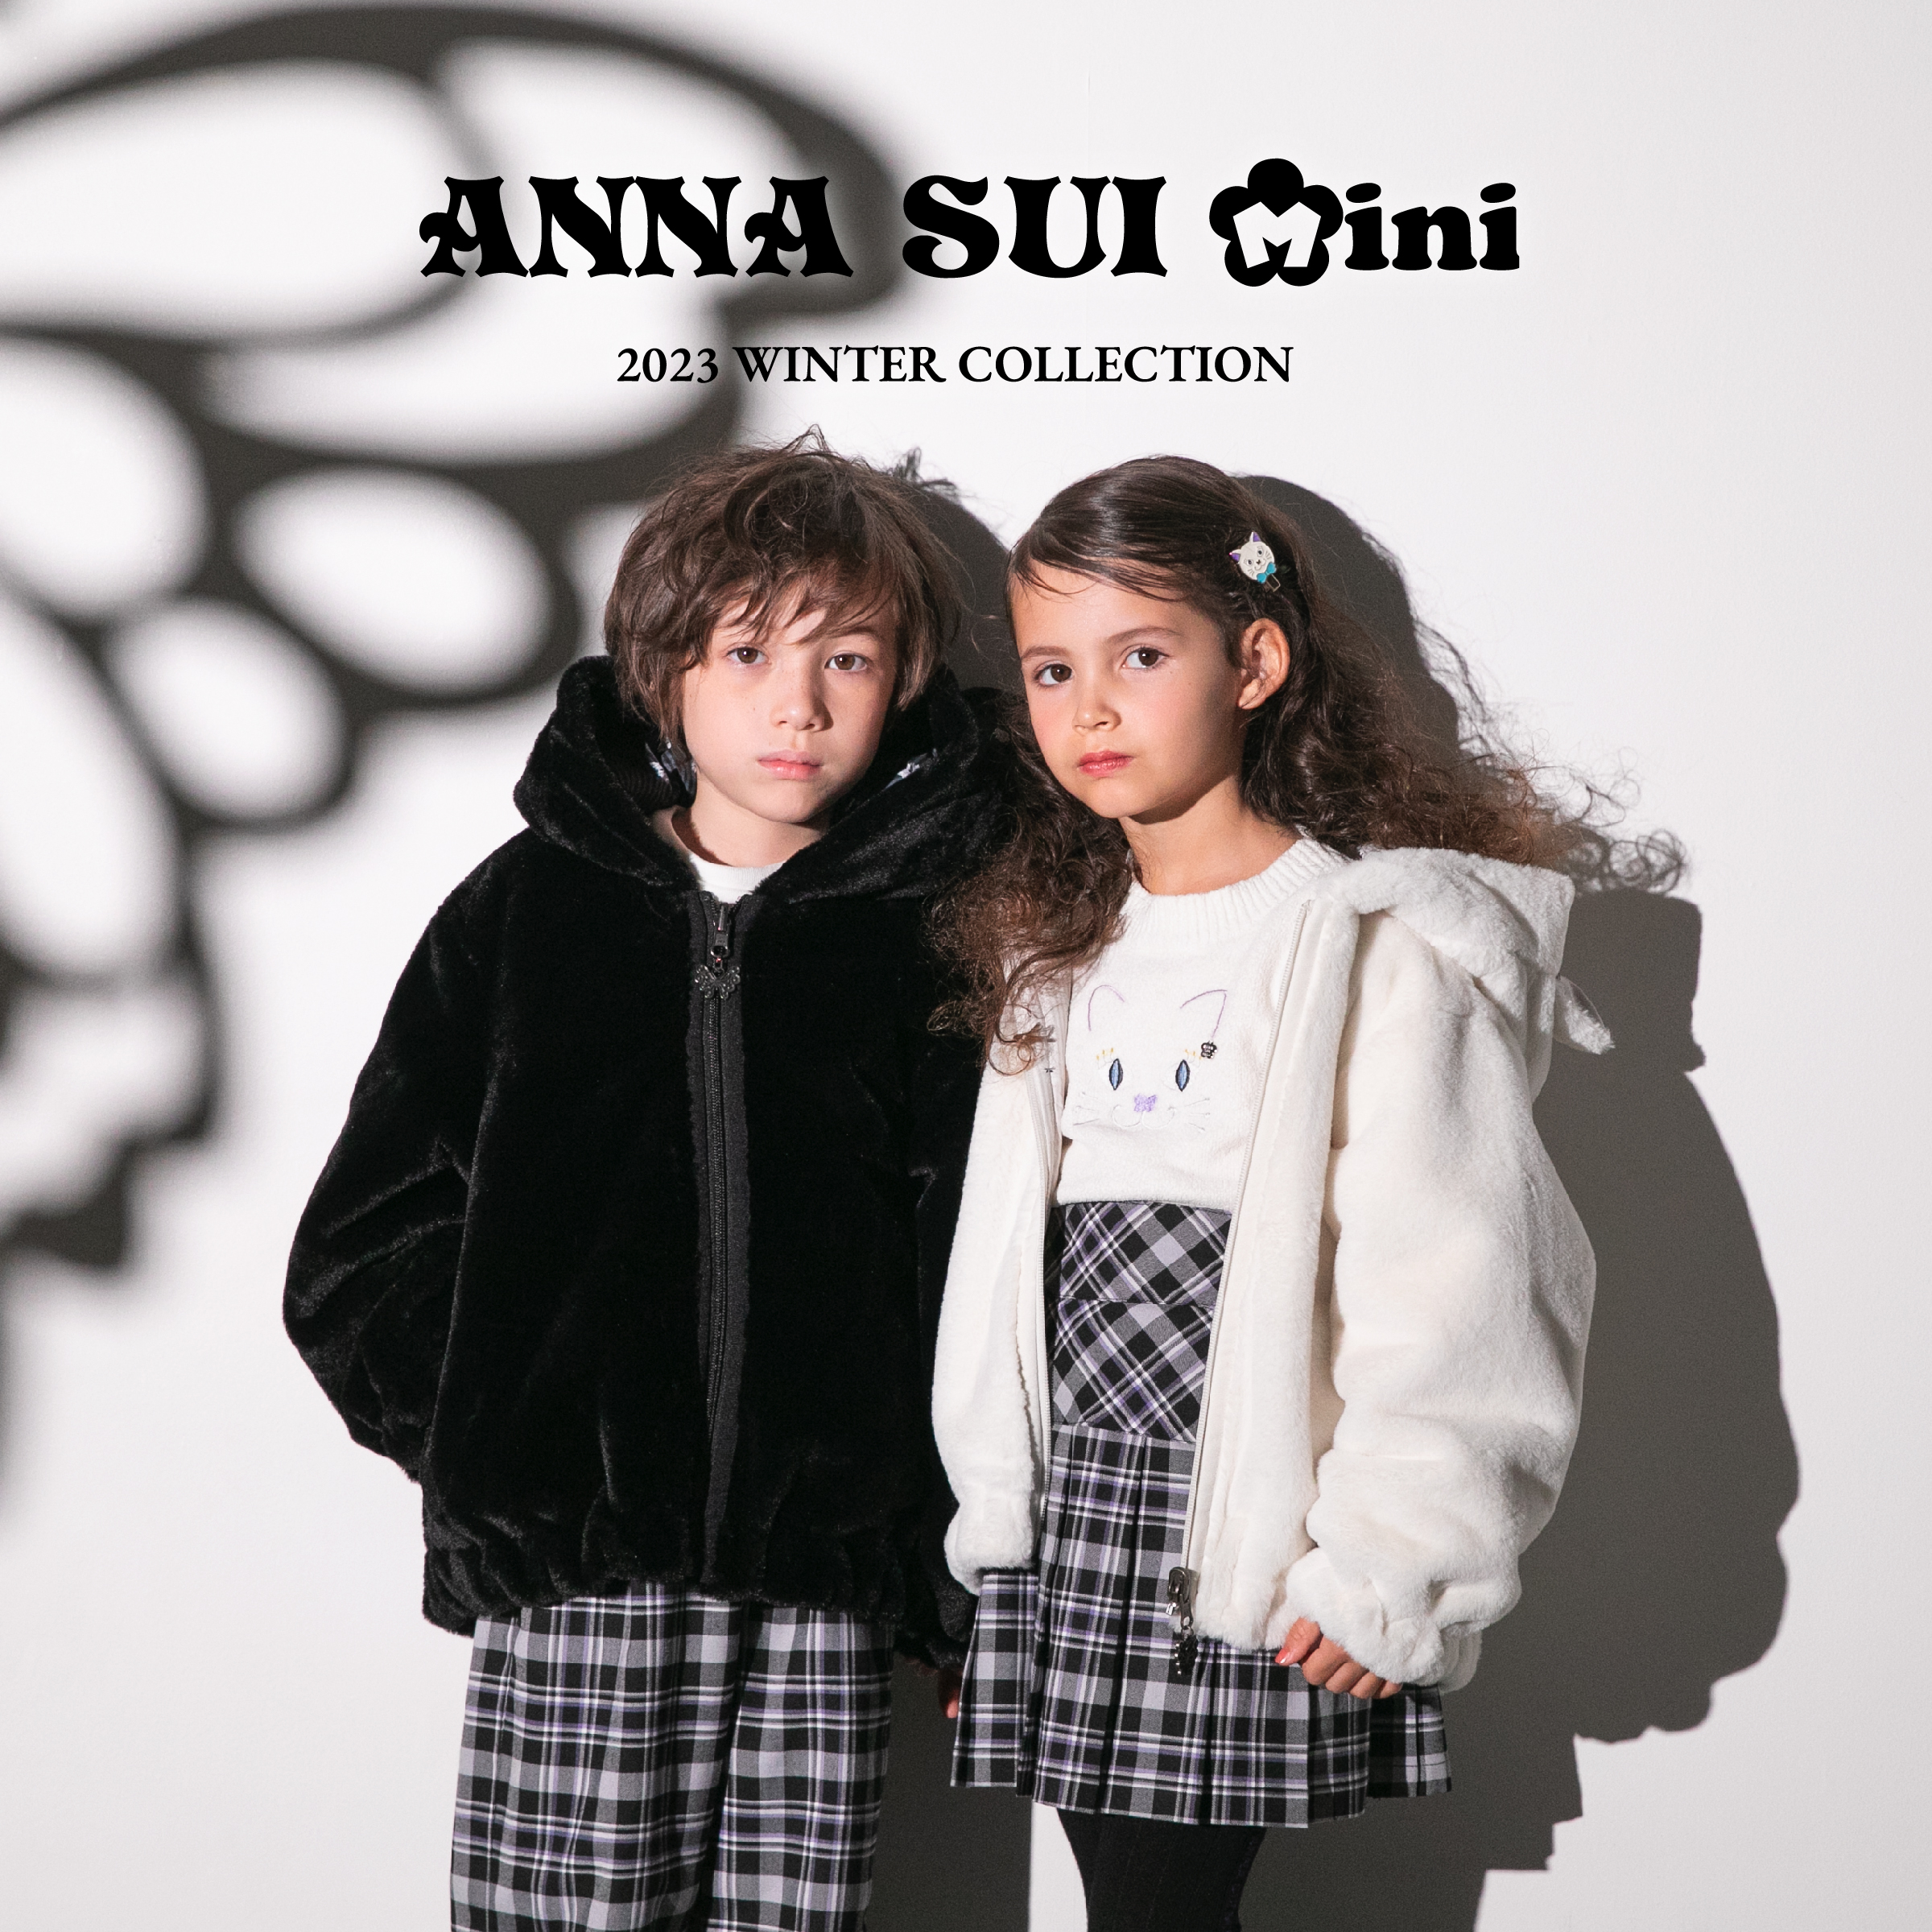 ANNA SUI miniの最新冬コレクションをWEB CATALOGからcheck！